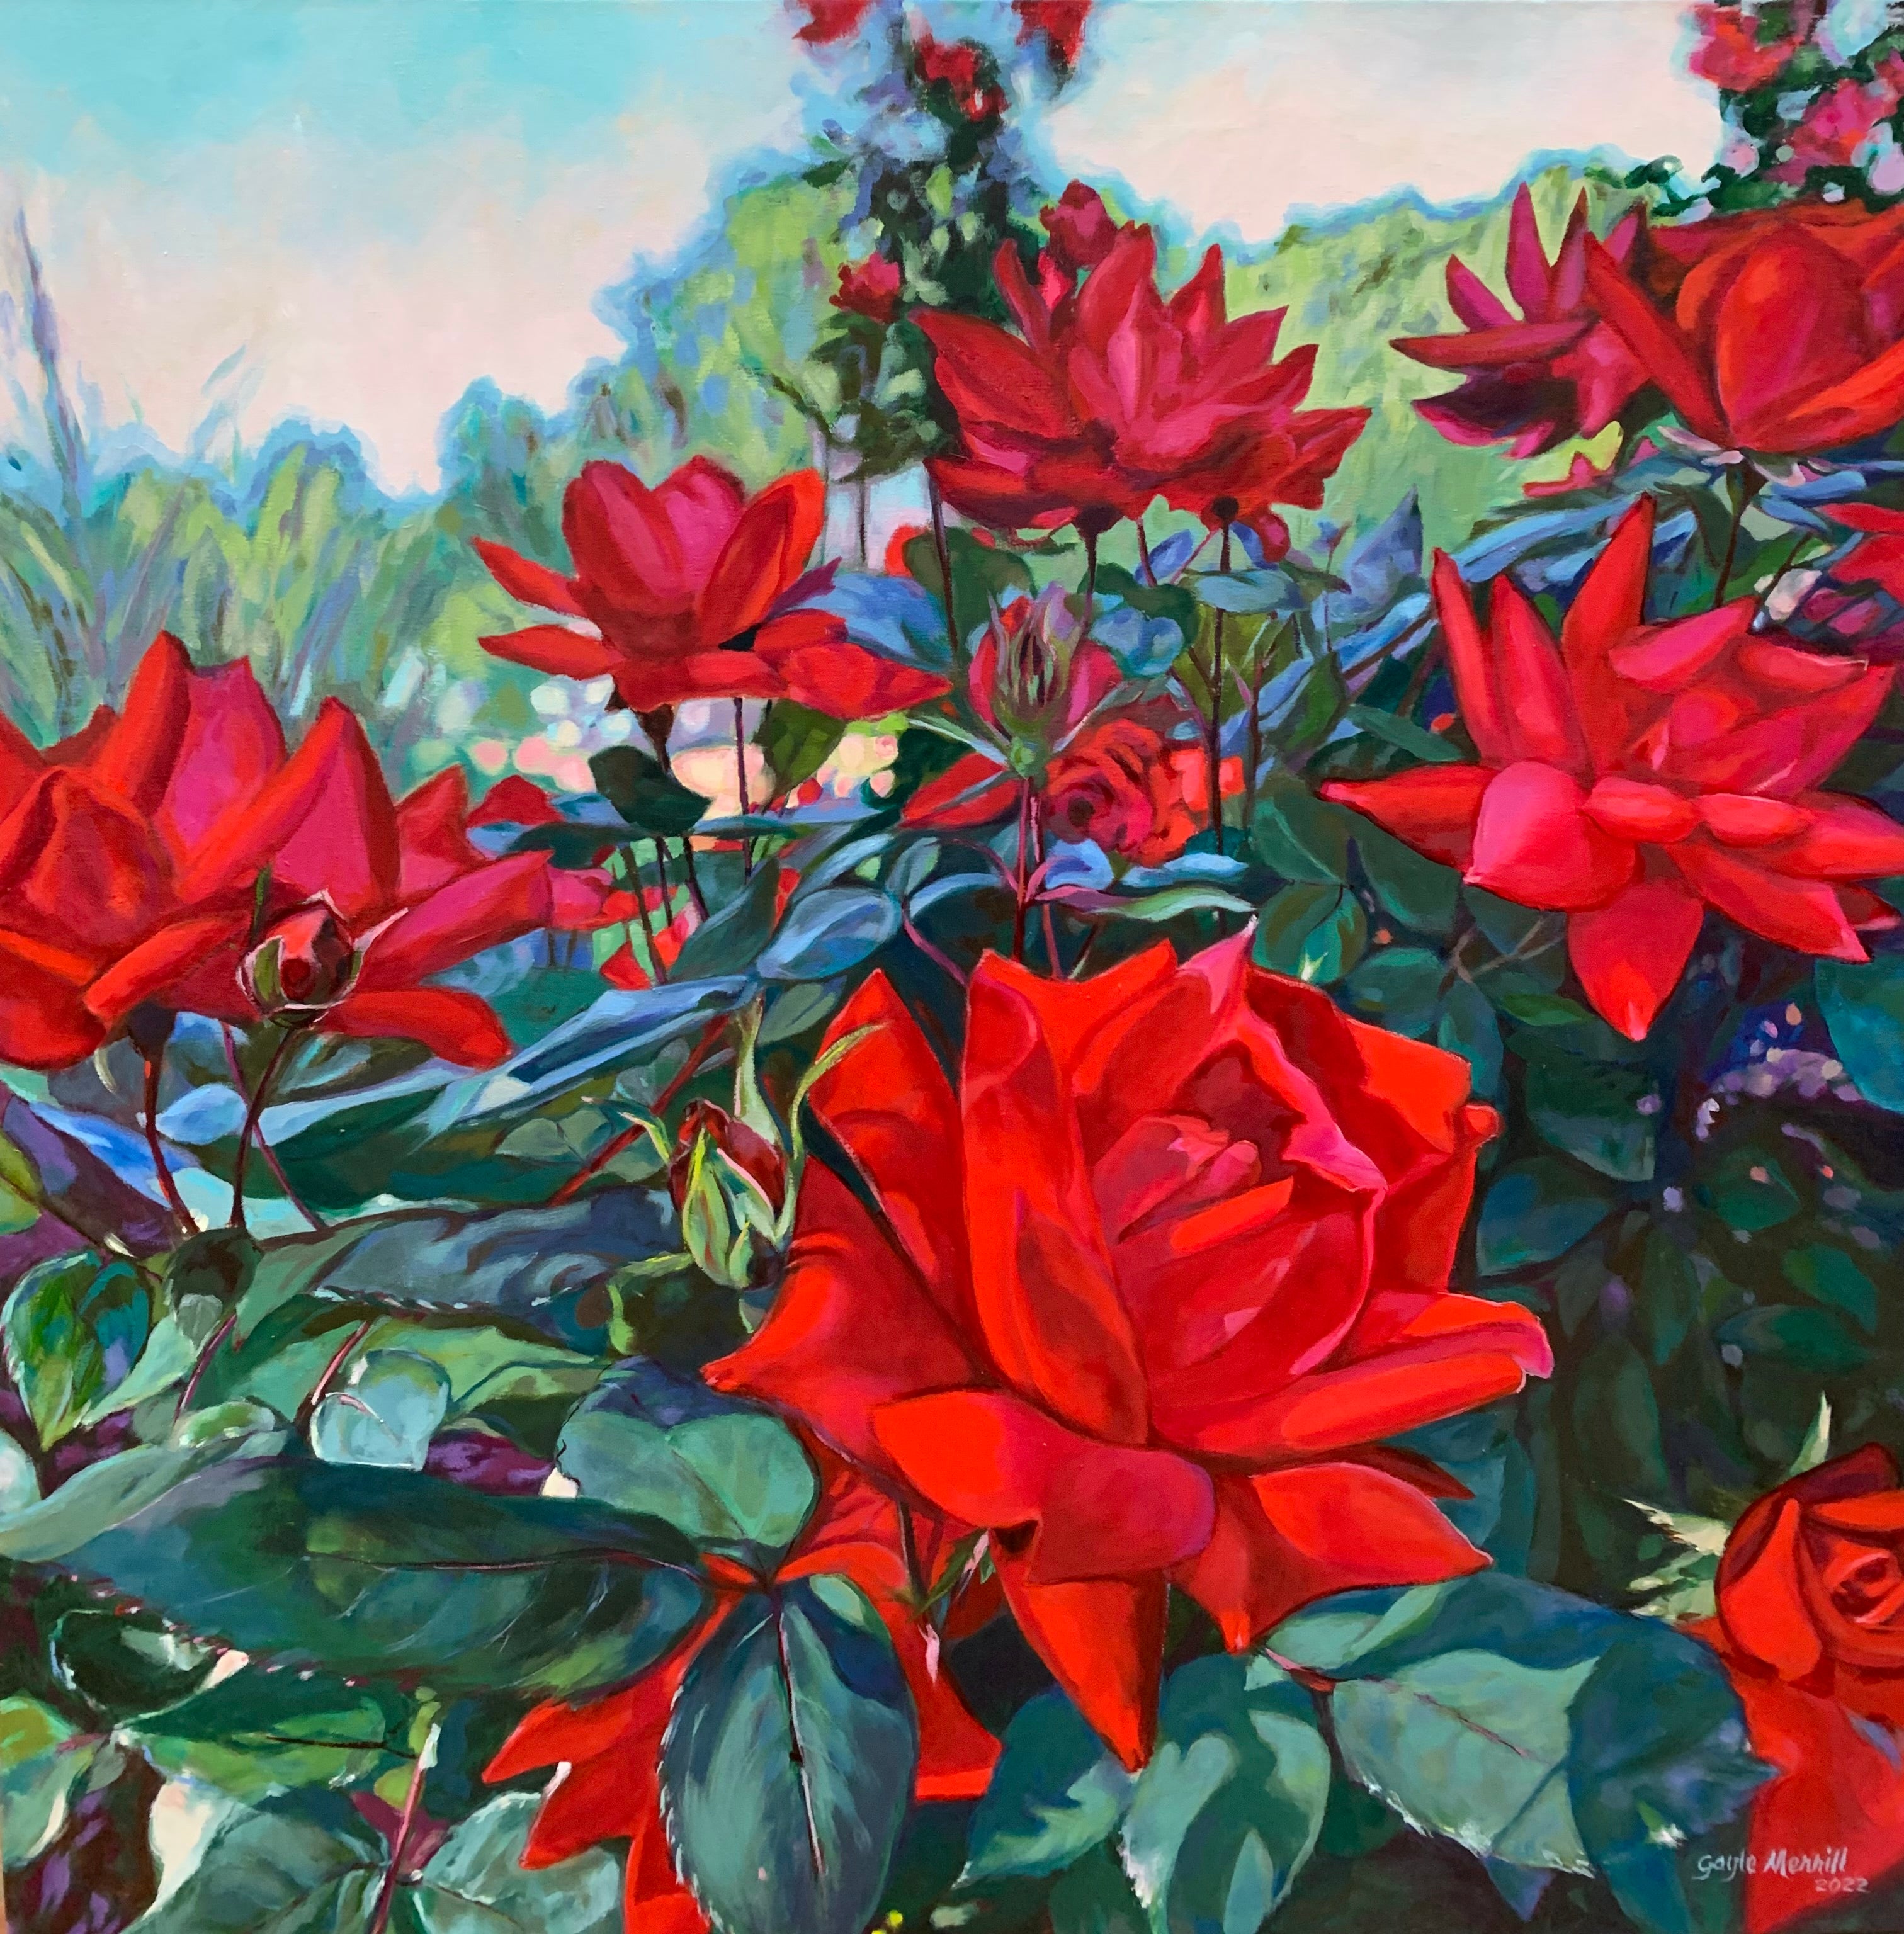 Gayle Merrill - Roses Delight